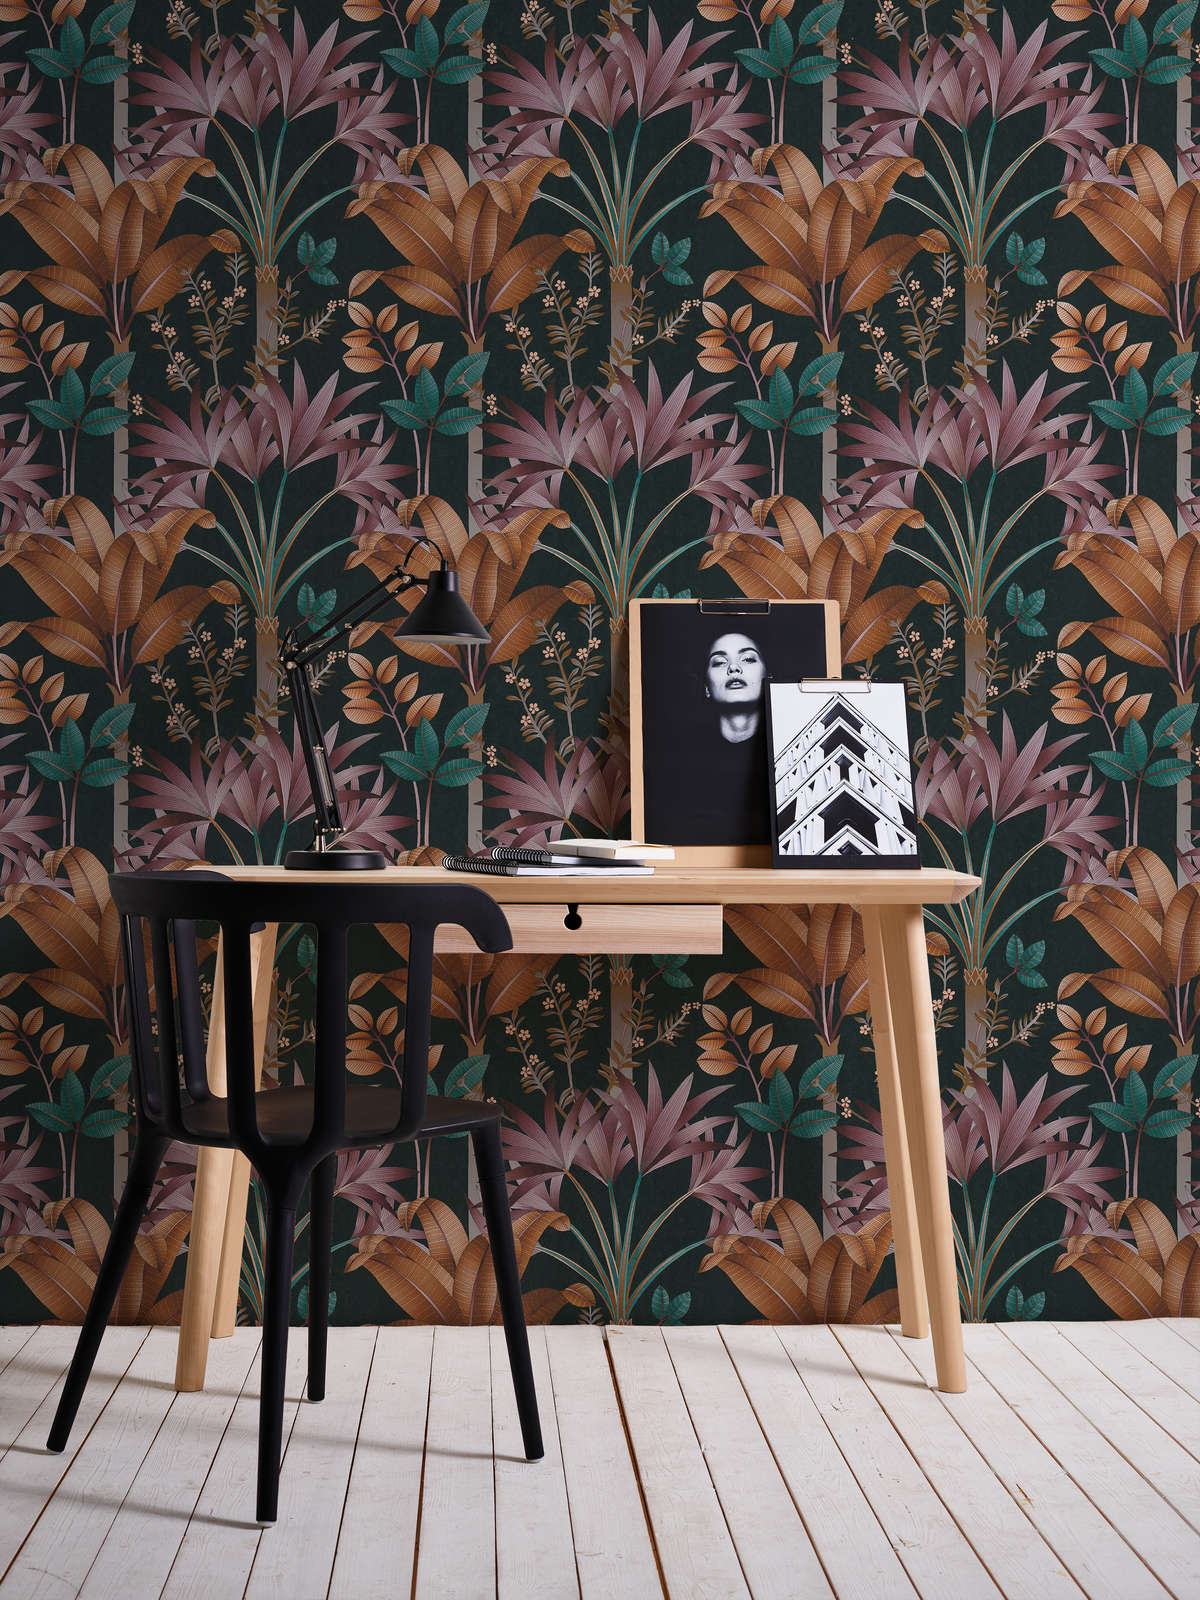             Floral non-woven wallpaper with leaf pattern - multicoloured, black, orange
        